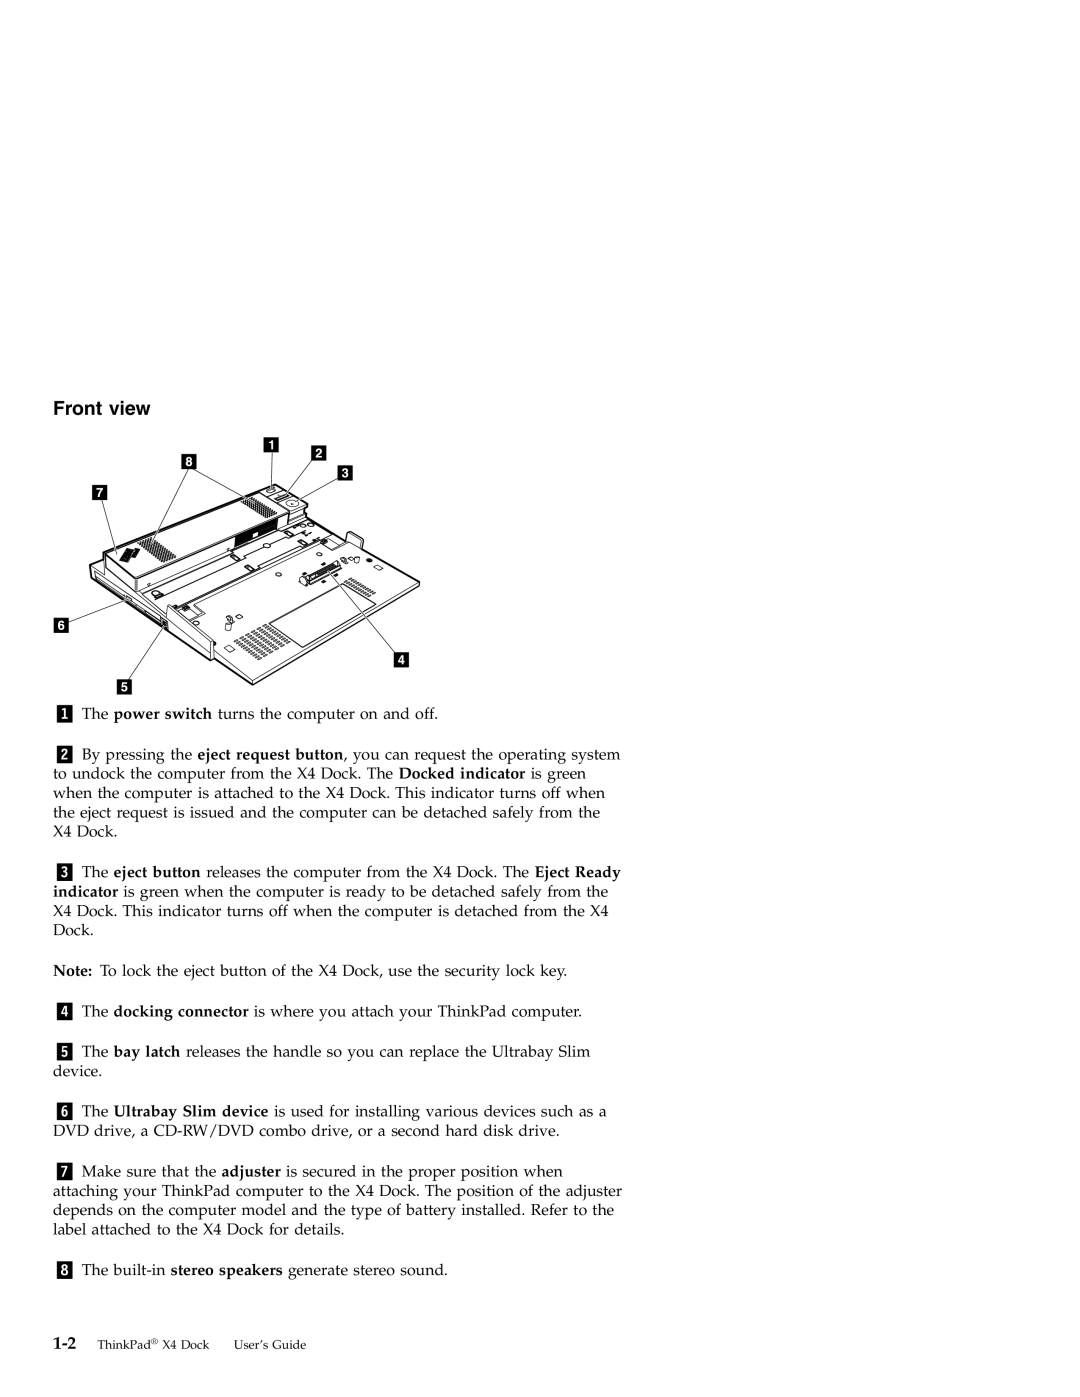 IBM X4 manual Front view 